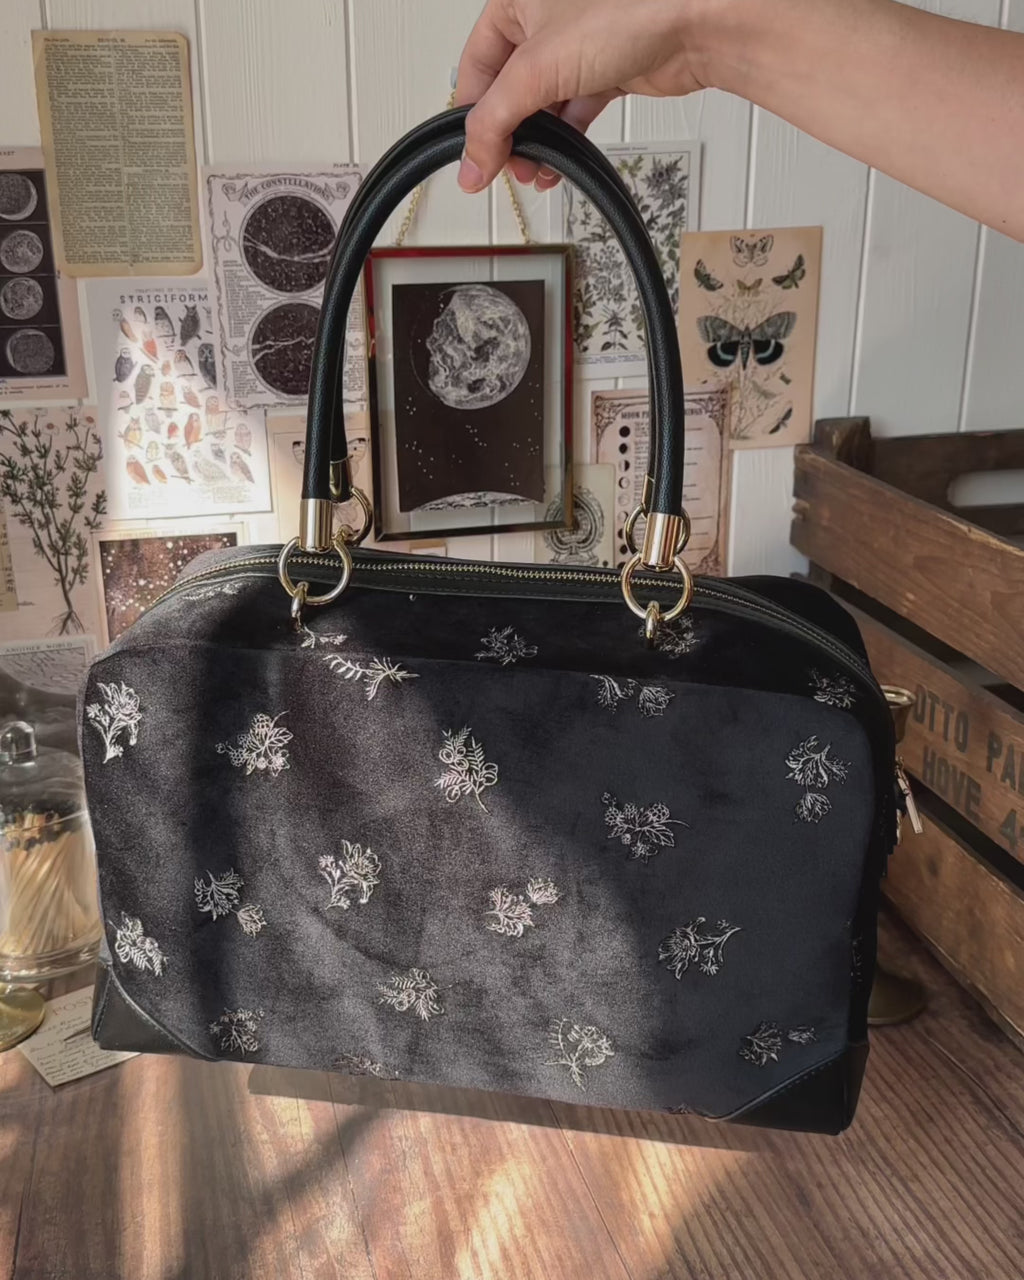 Hepsie Velvet Embroidered Bag - Black by Fable England